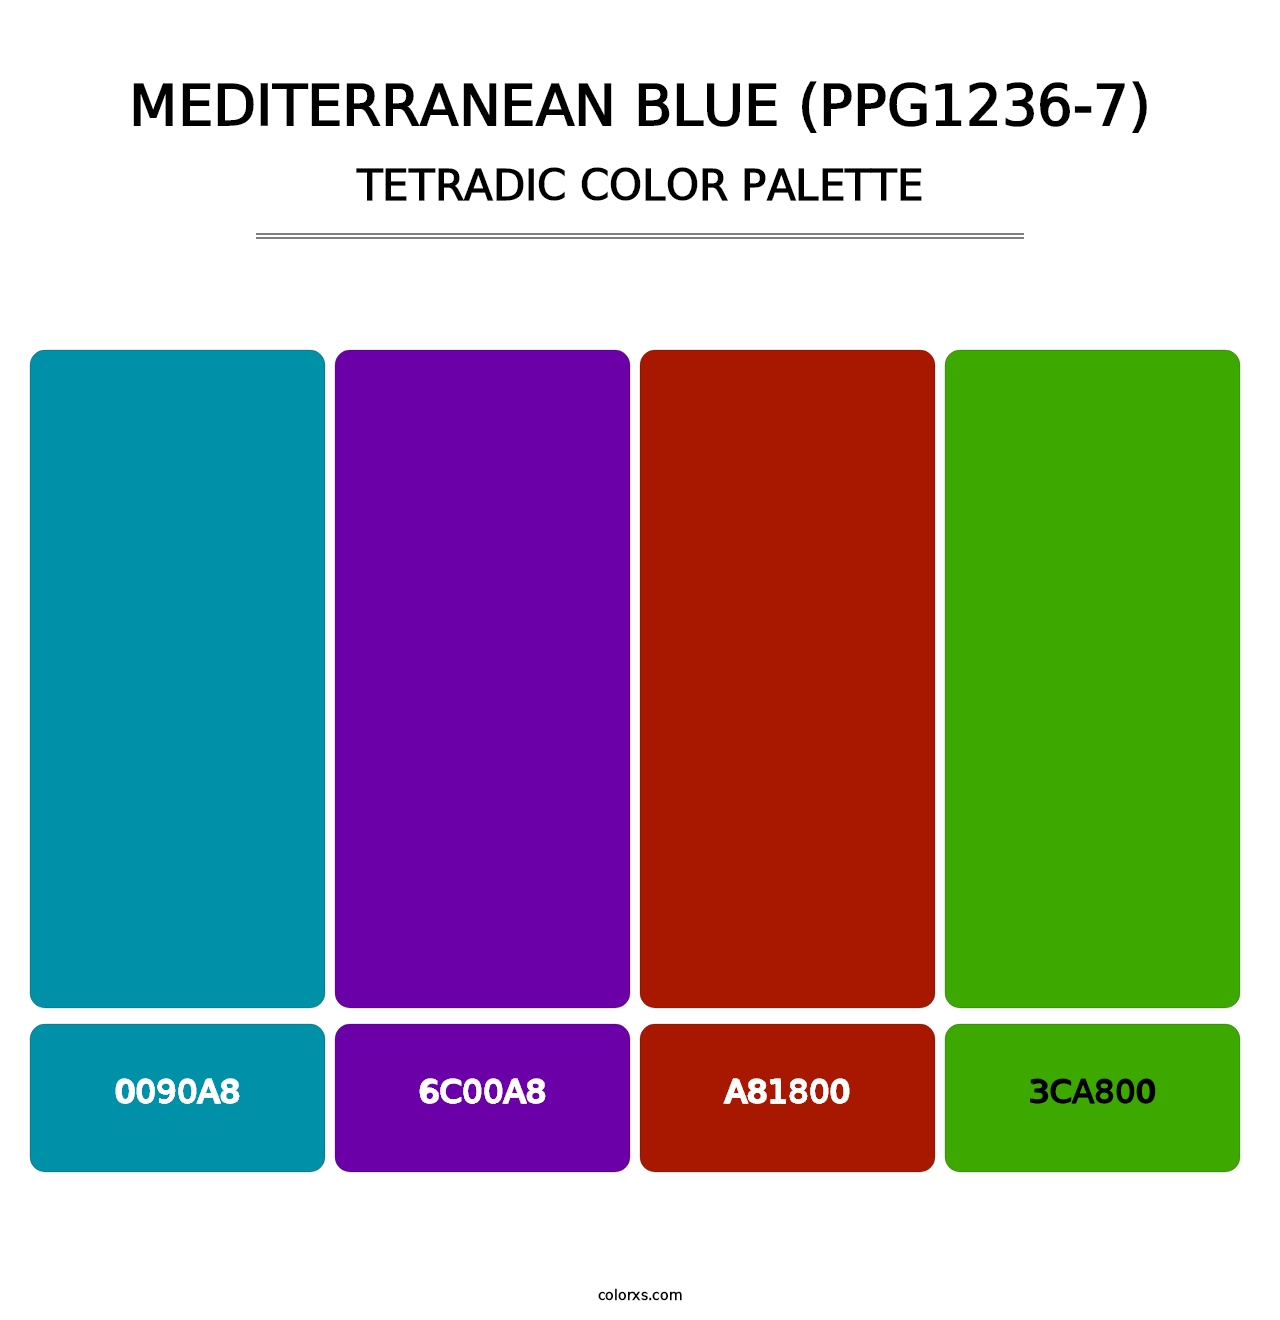 Mediterranean Blue (PPG1236-7) - Tetradic Color Palette